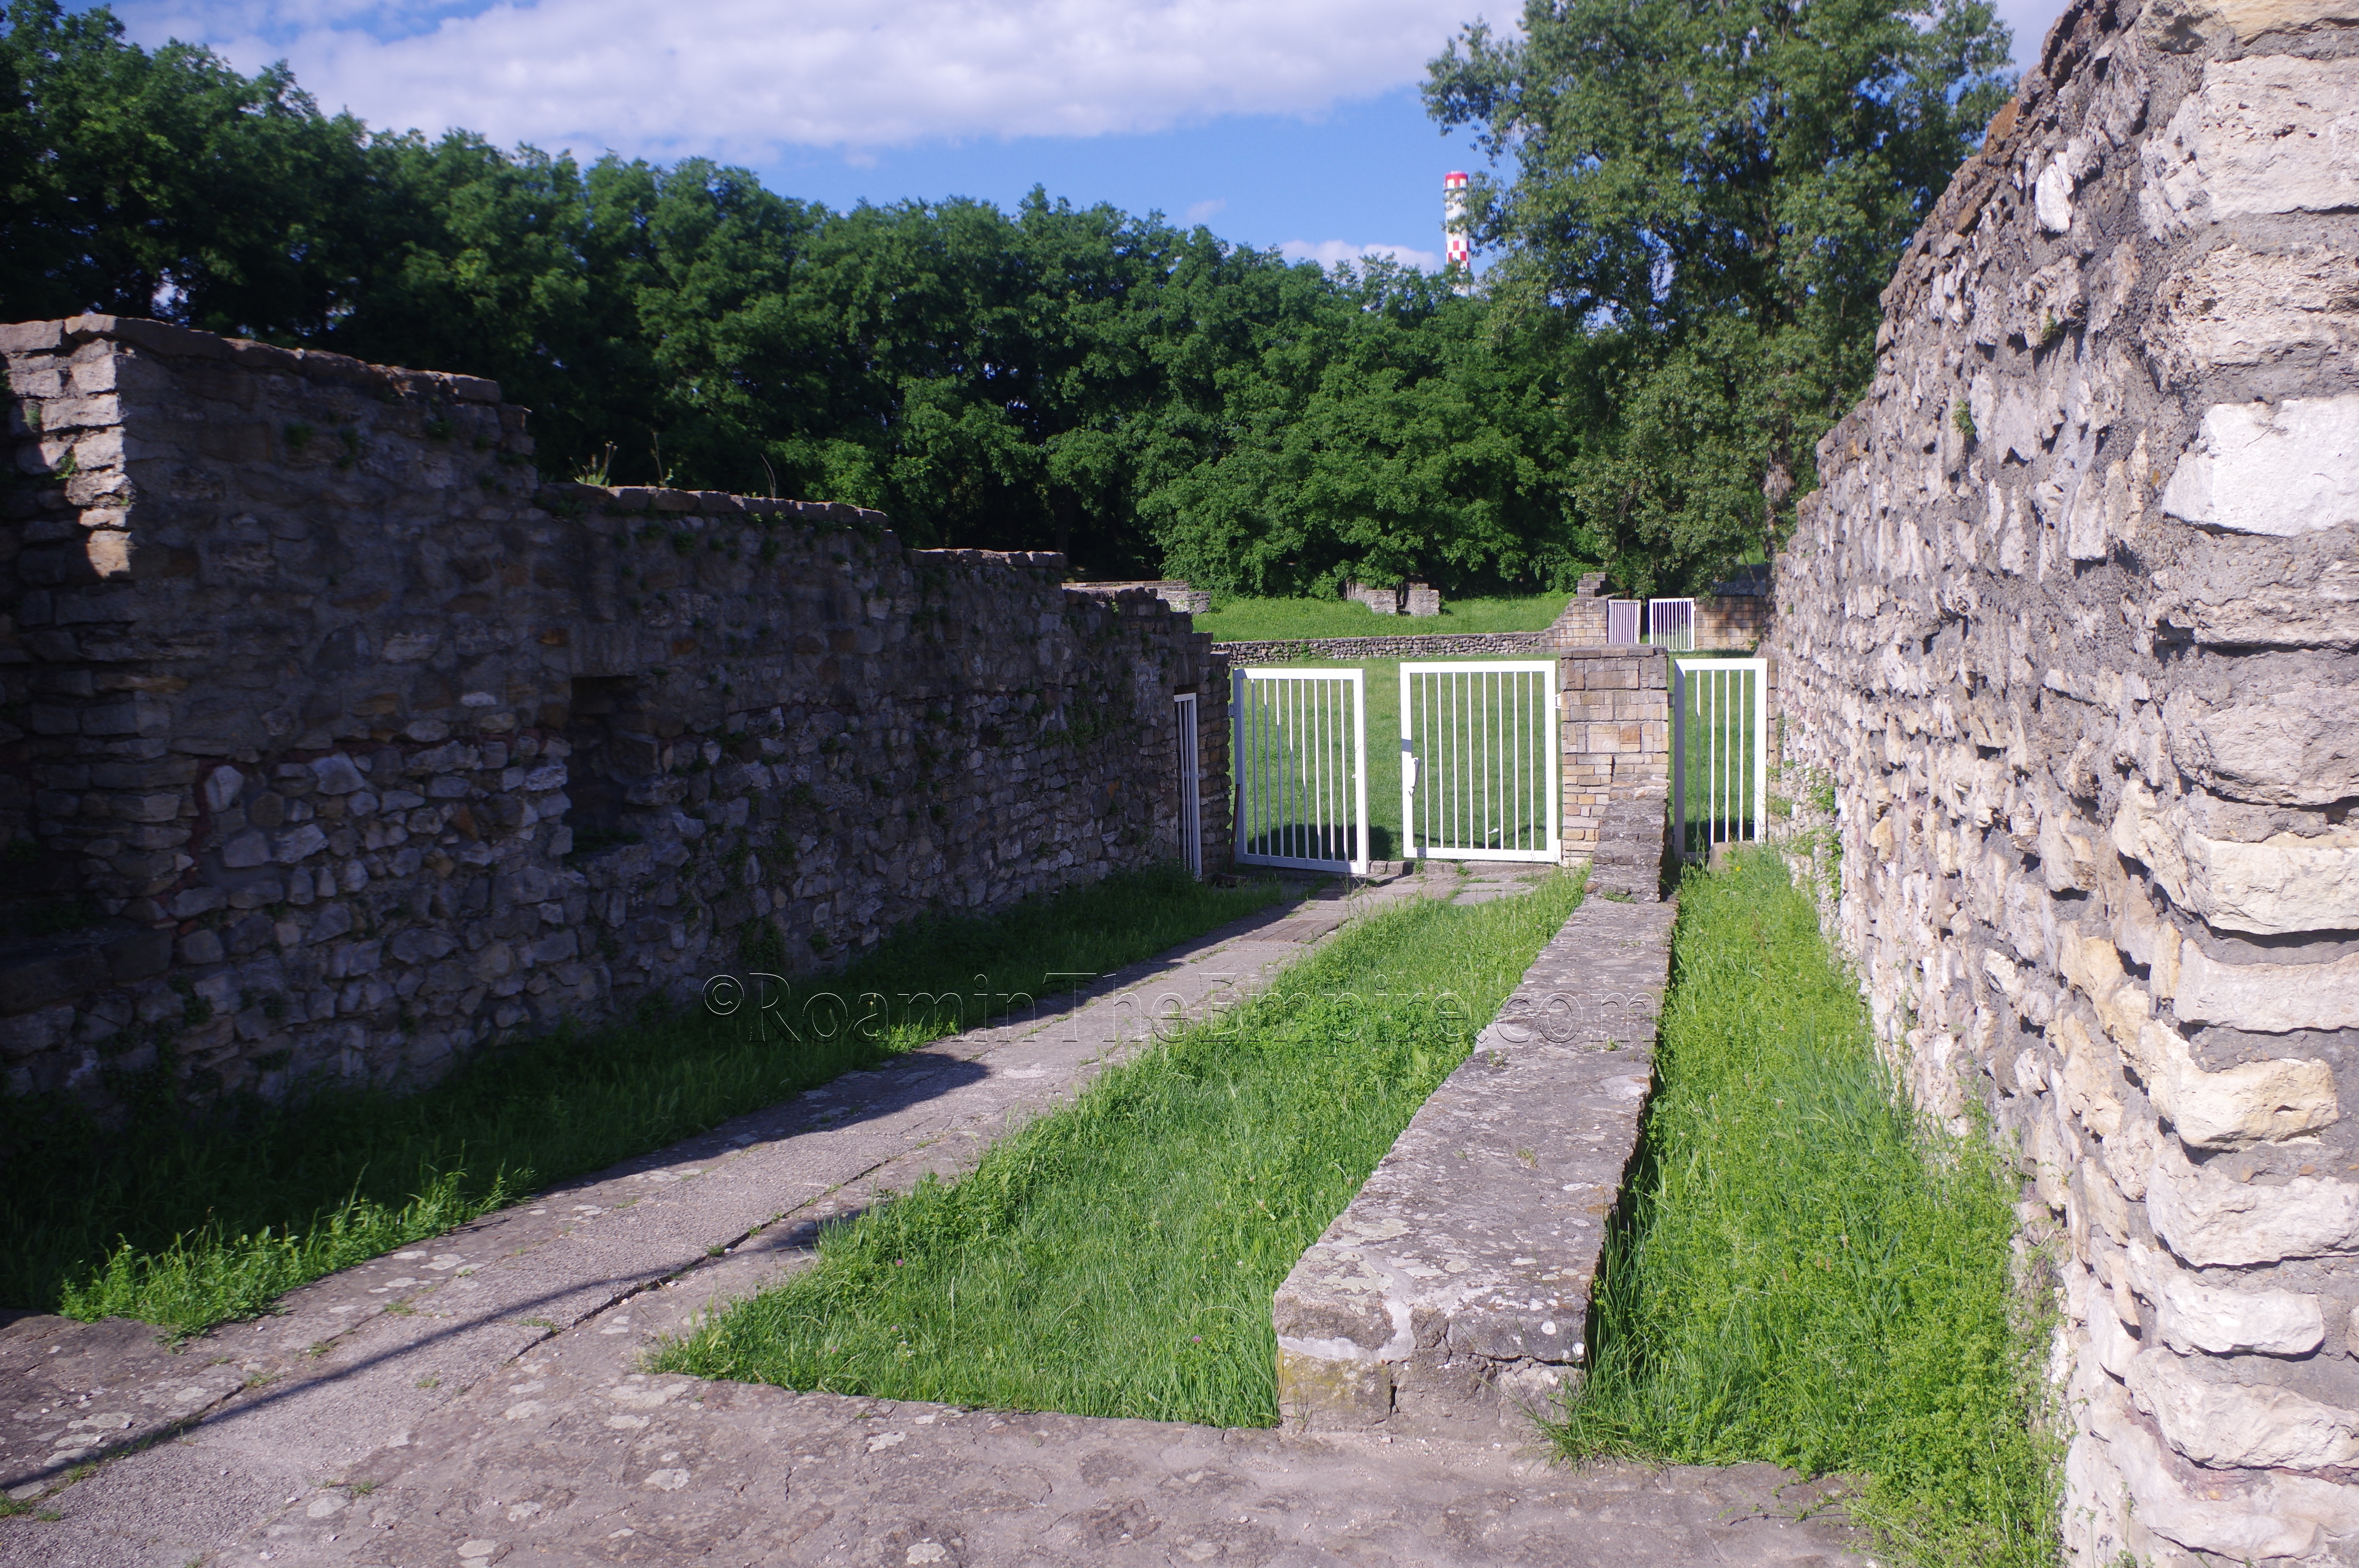 Western entrance of the civilian settlement amphitheater.